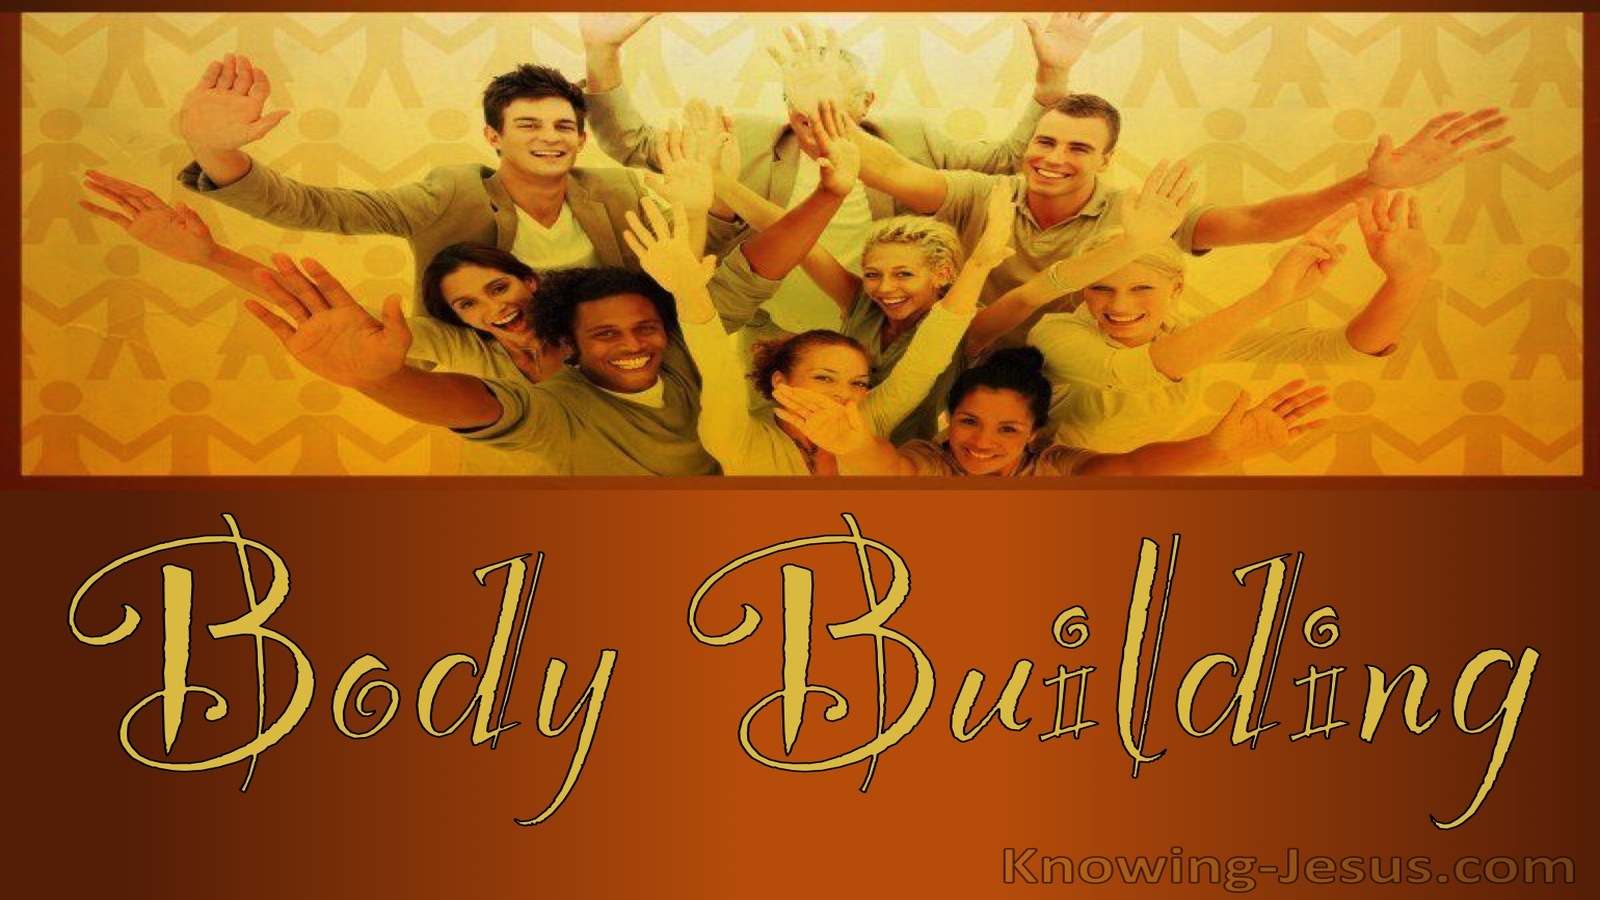 Body Building (devotional)